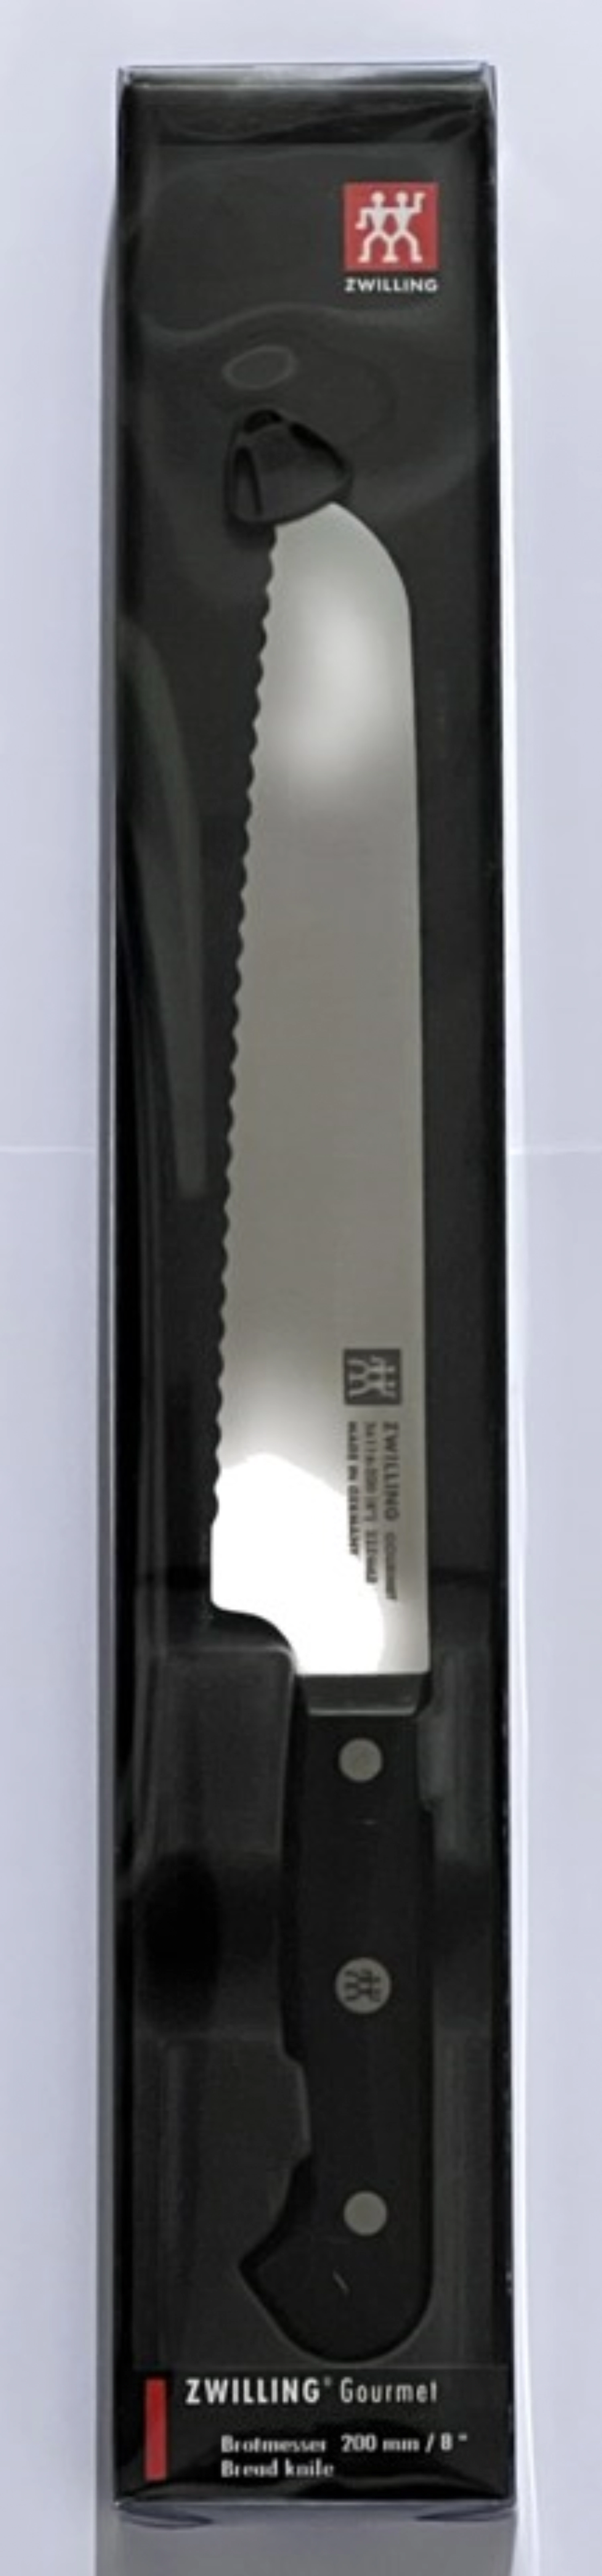 Zwilling gourmet couteau à pain, 200 mm